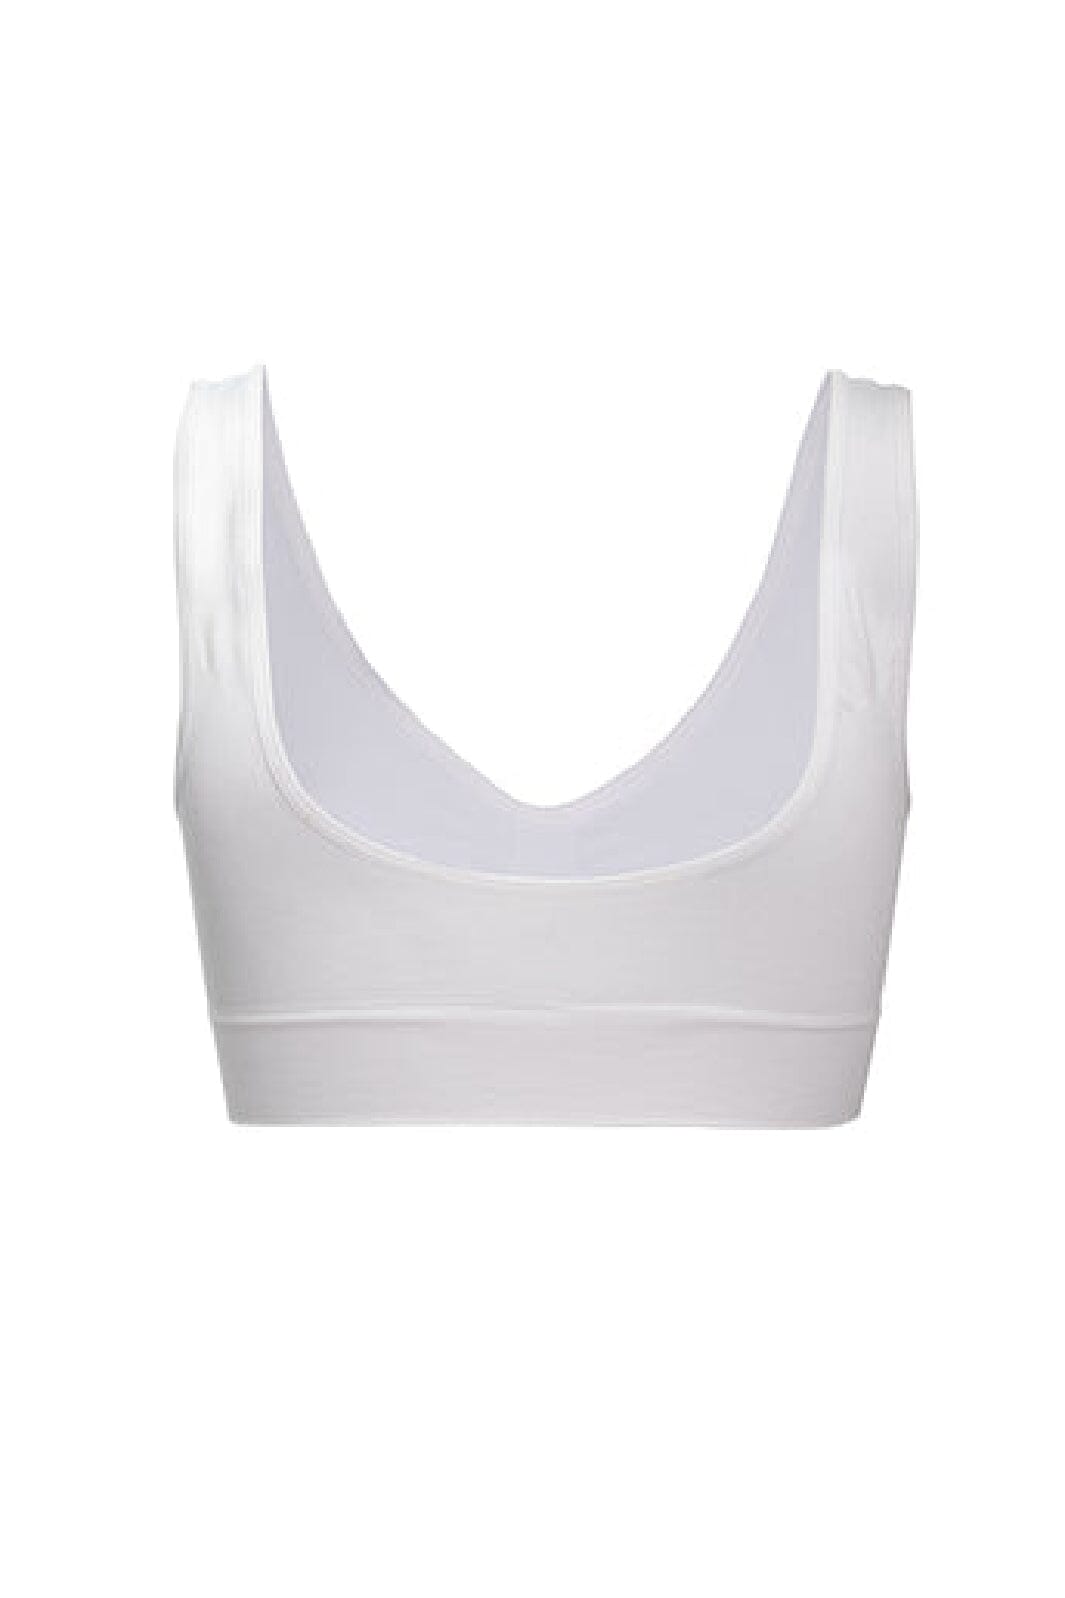 Soft basic - Soffi Bra top wide strap 2 pak - white BH 